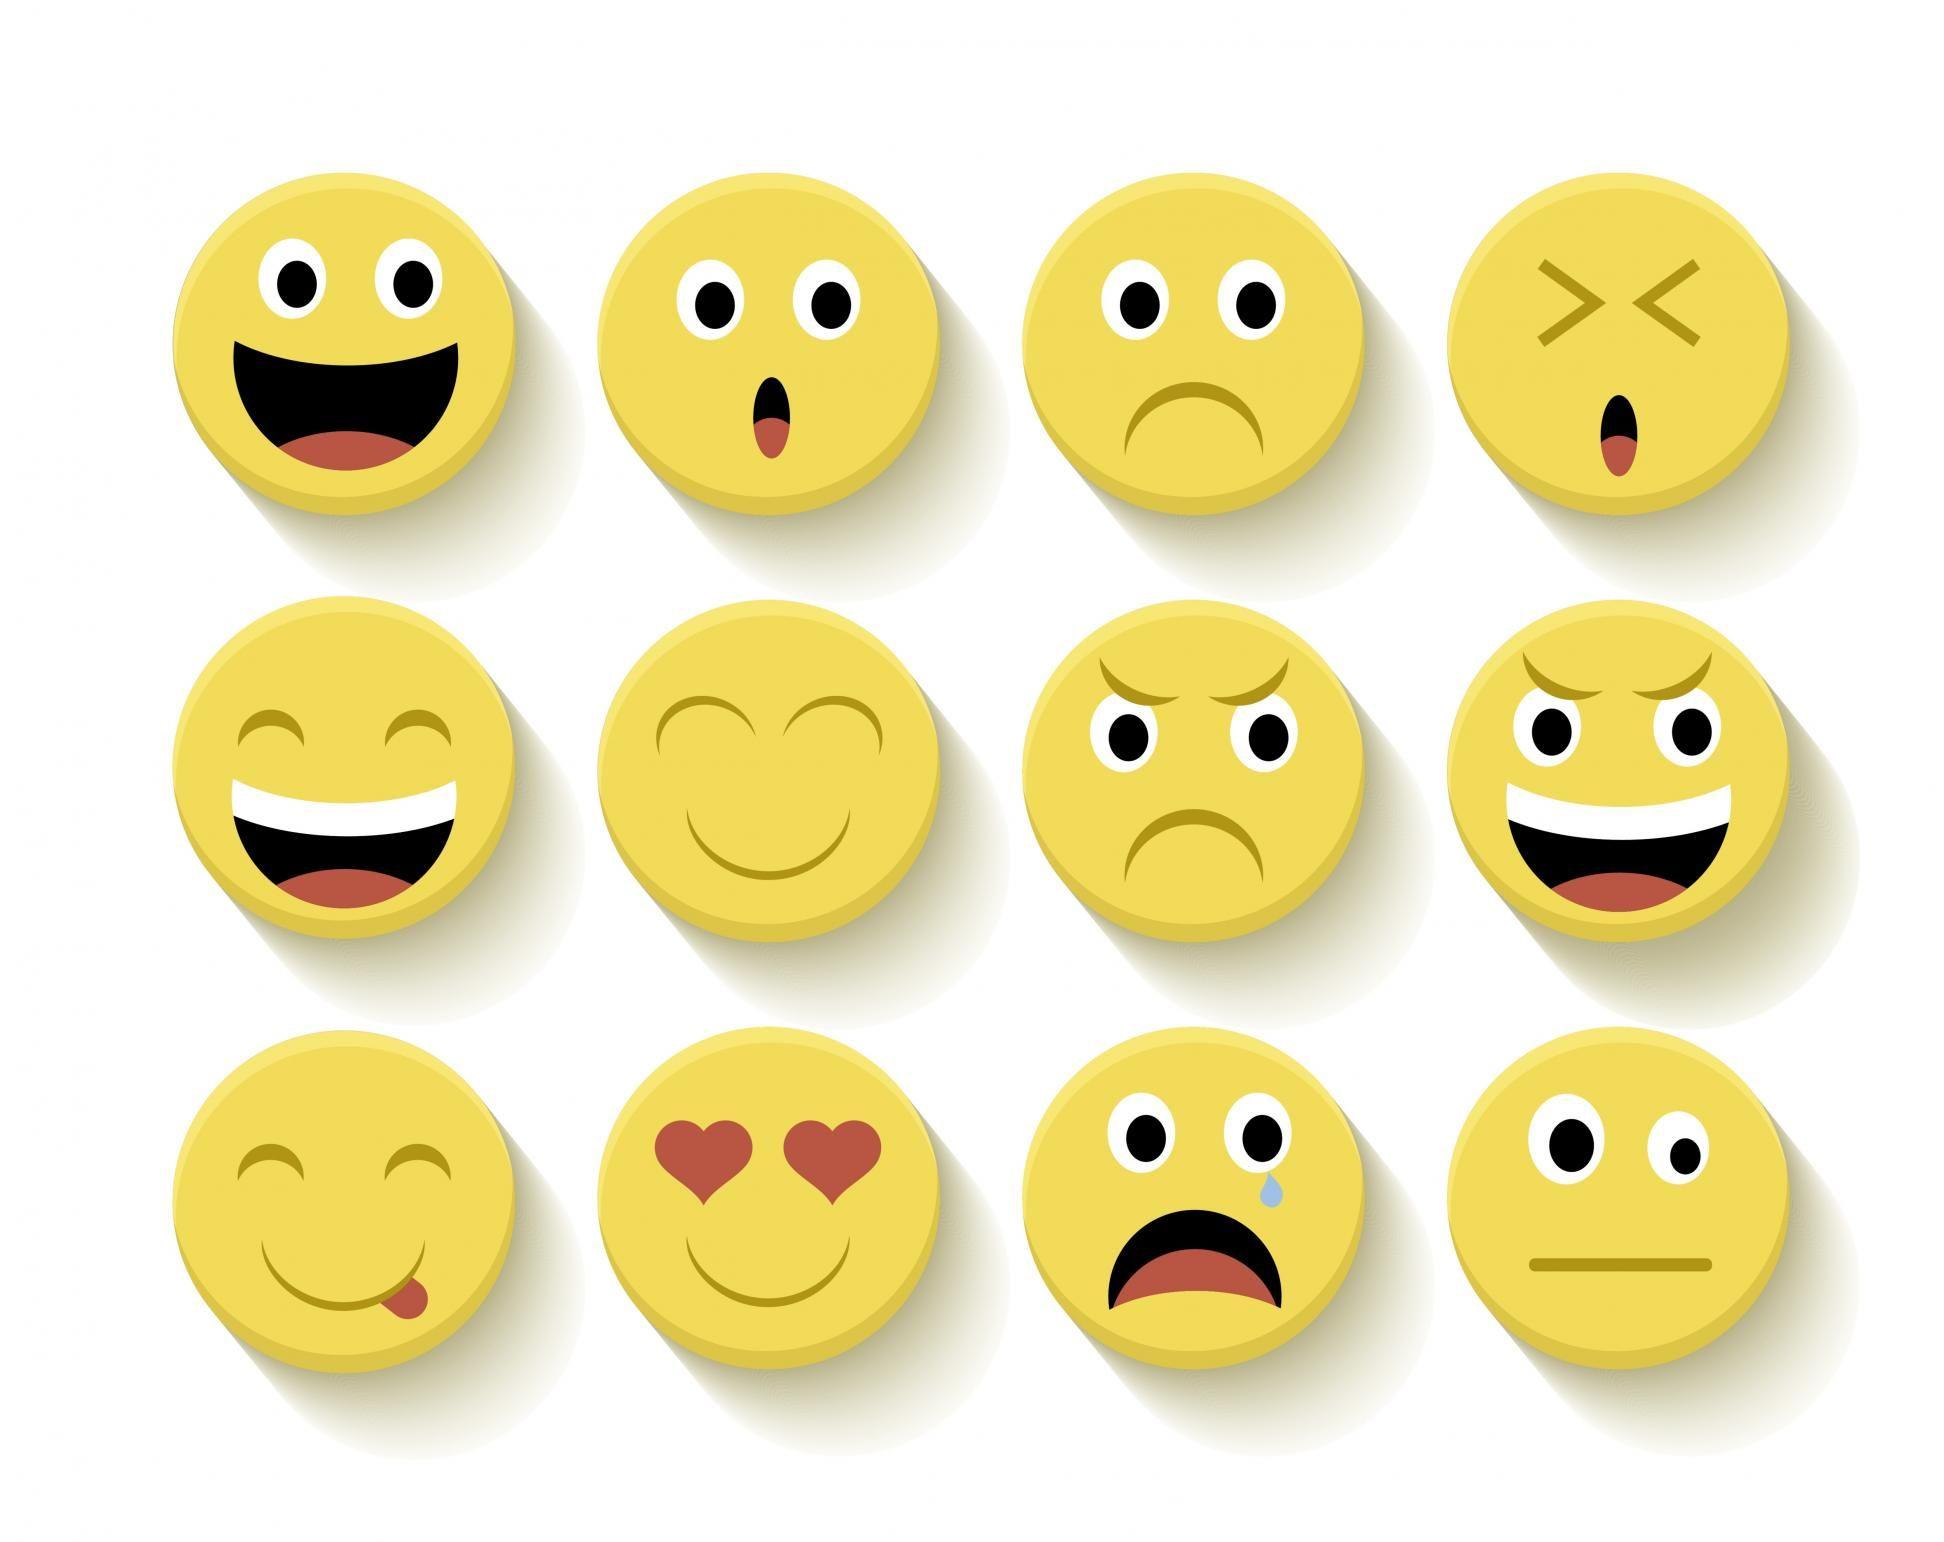 Surprised Face Emoji Wallpaper Desktop, Other Wallpaper